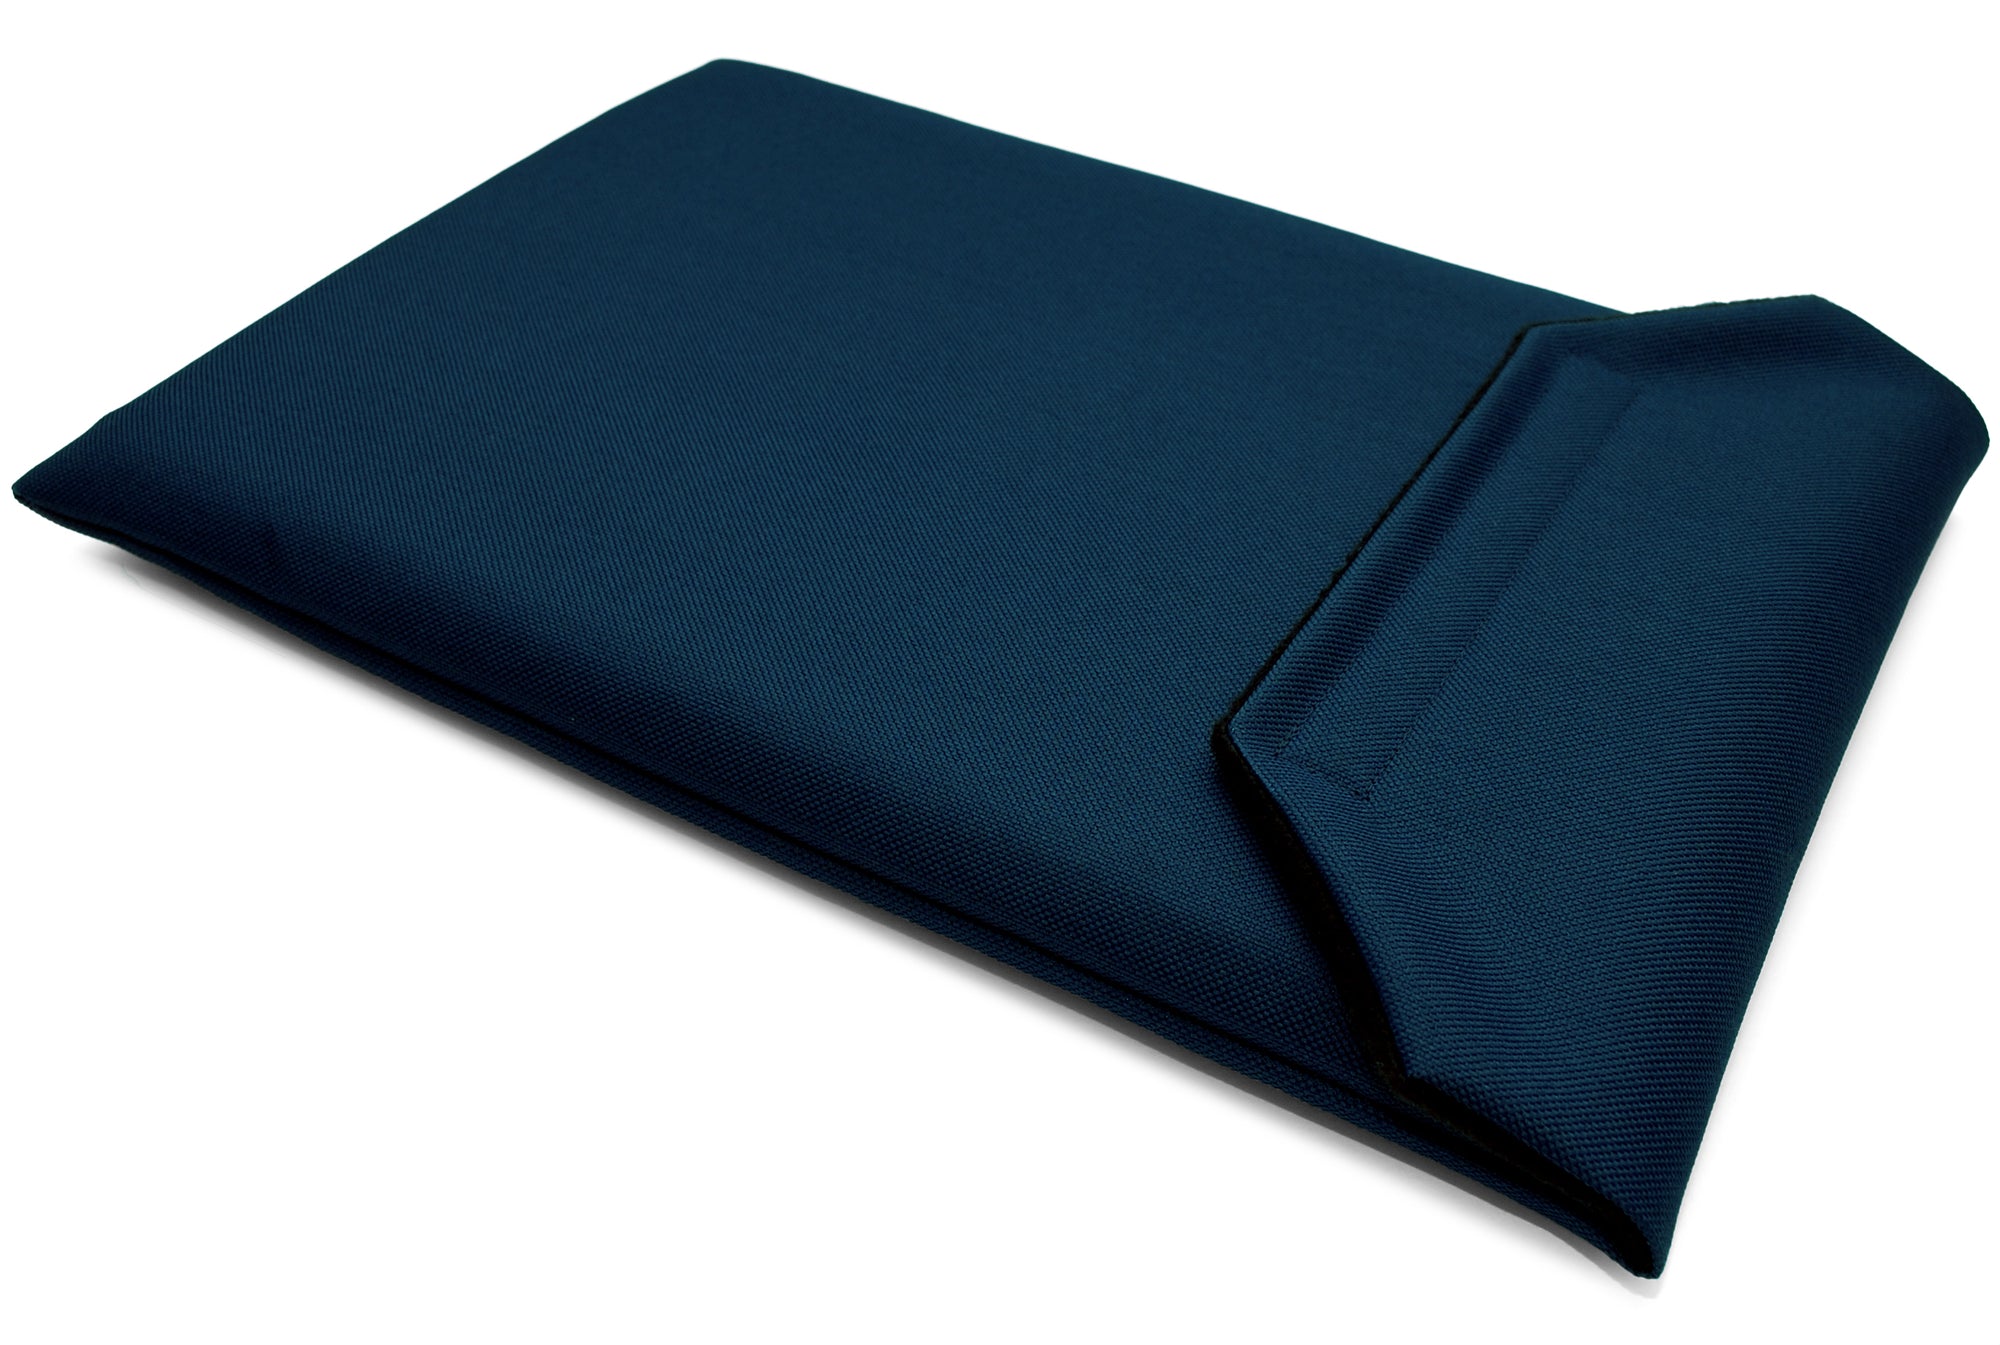 Dell Inspiron 15 3000 Sleeve Case - Navy Blue